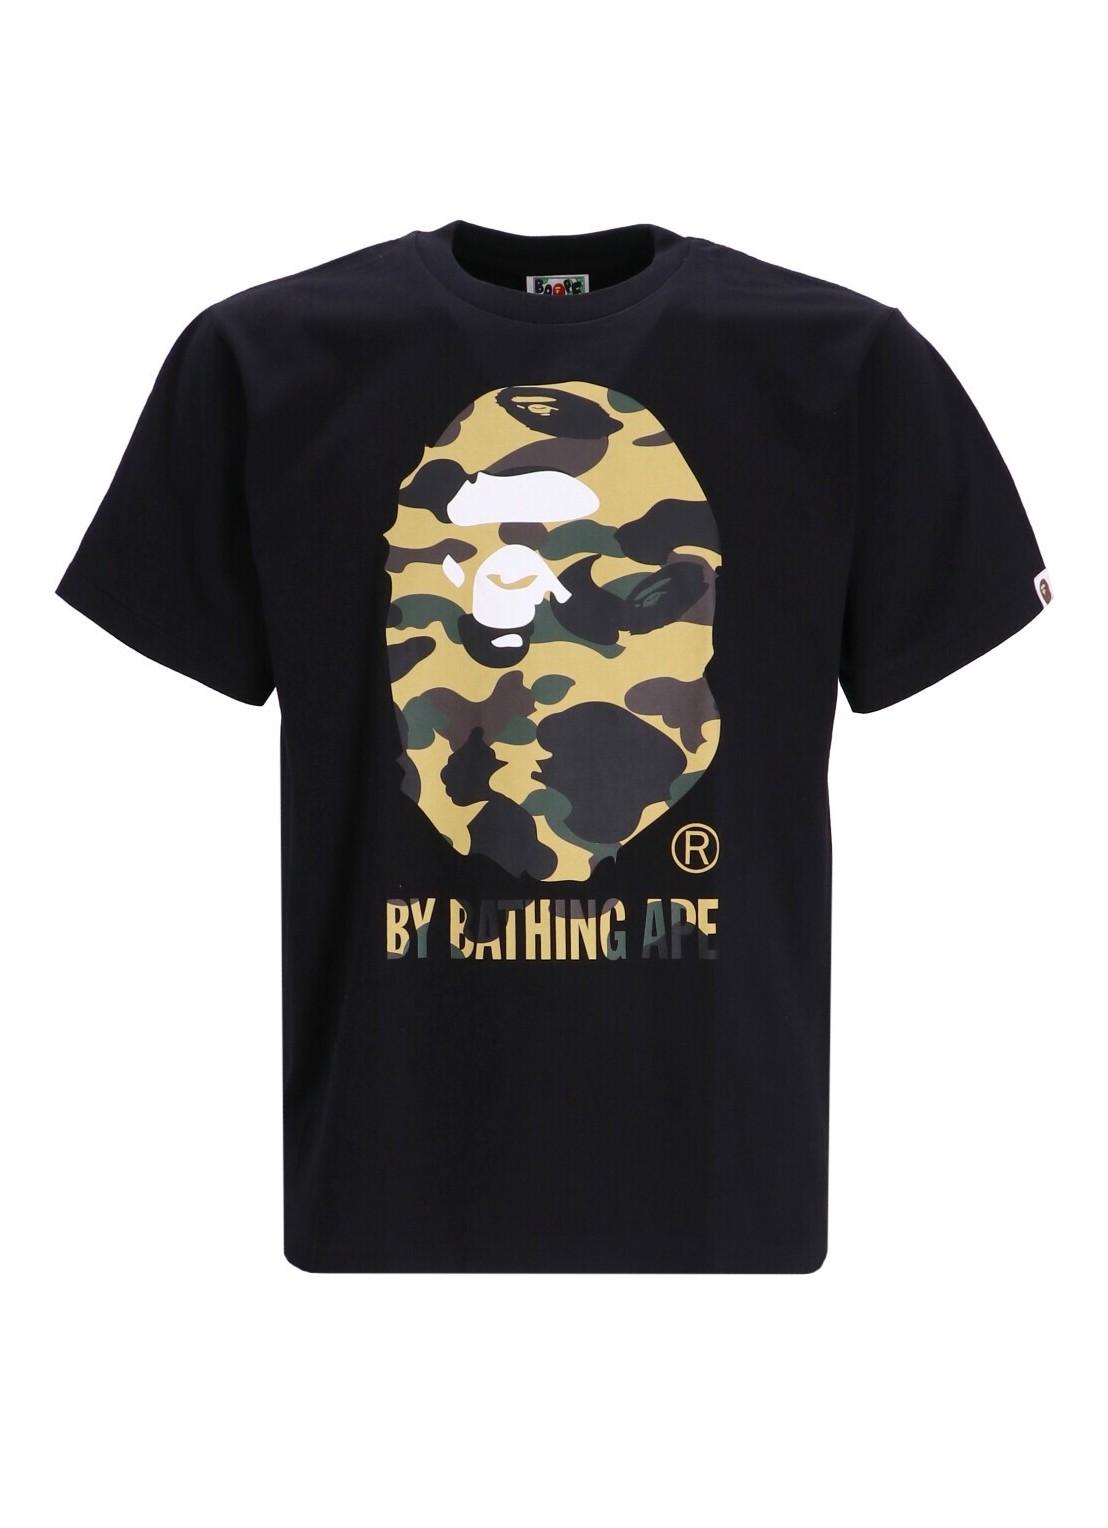 Camiseta bape t-shirt man 1st camo by bathing ape tee m 001tei801009m bkxye talla XL
 